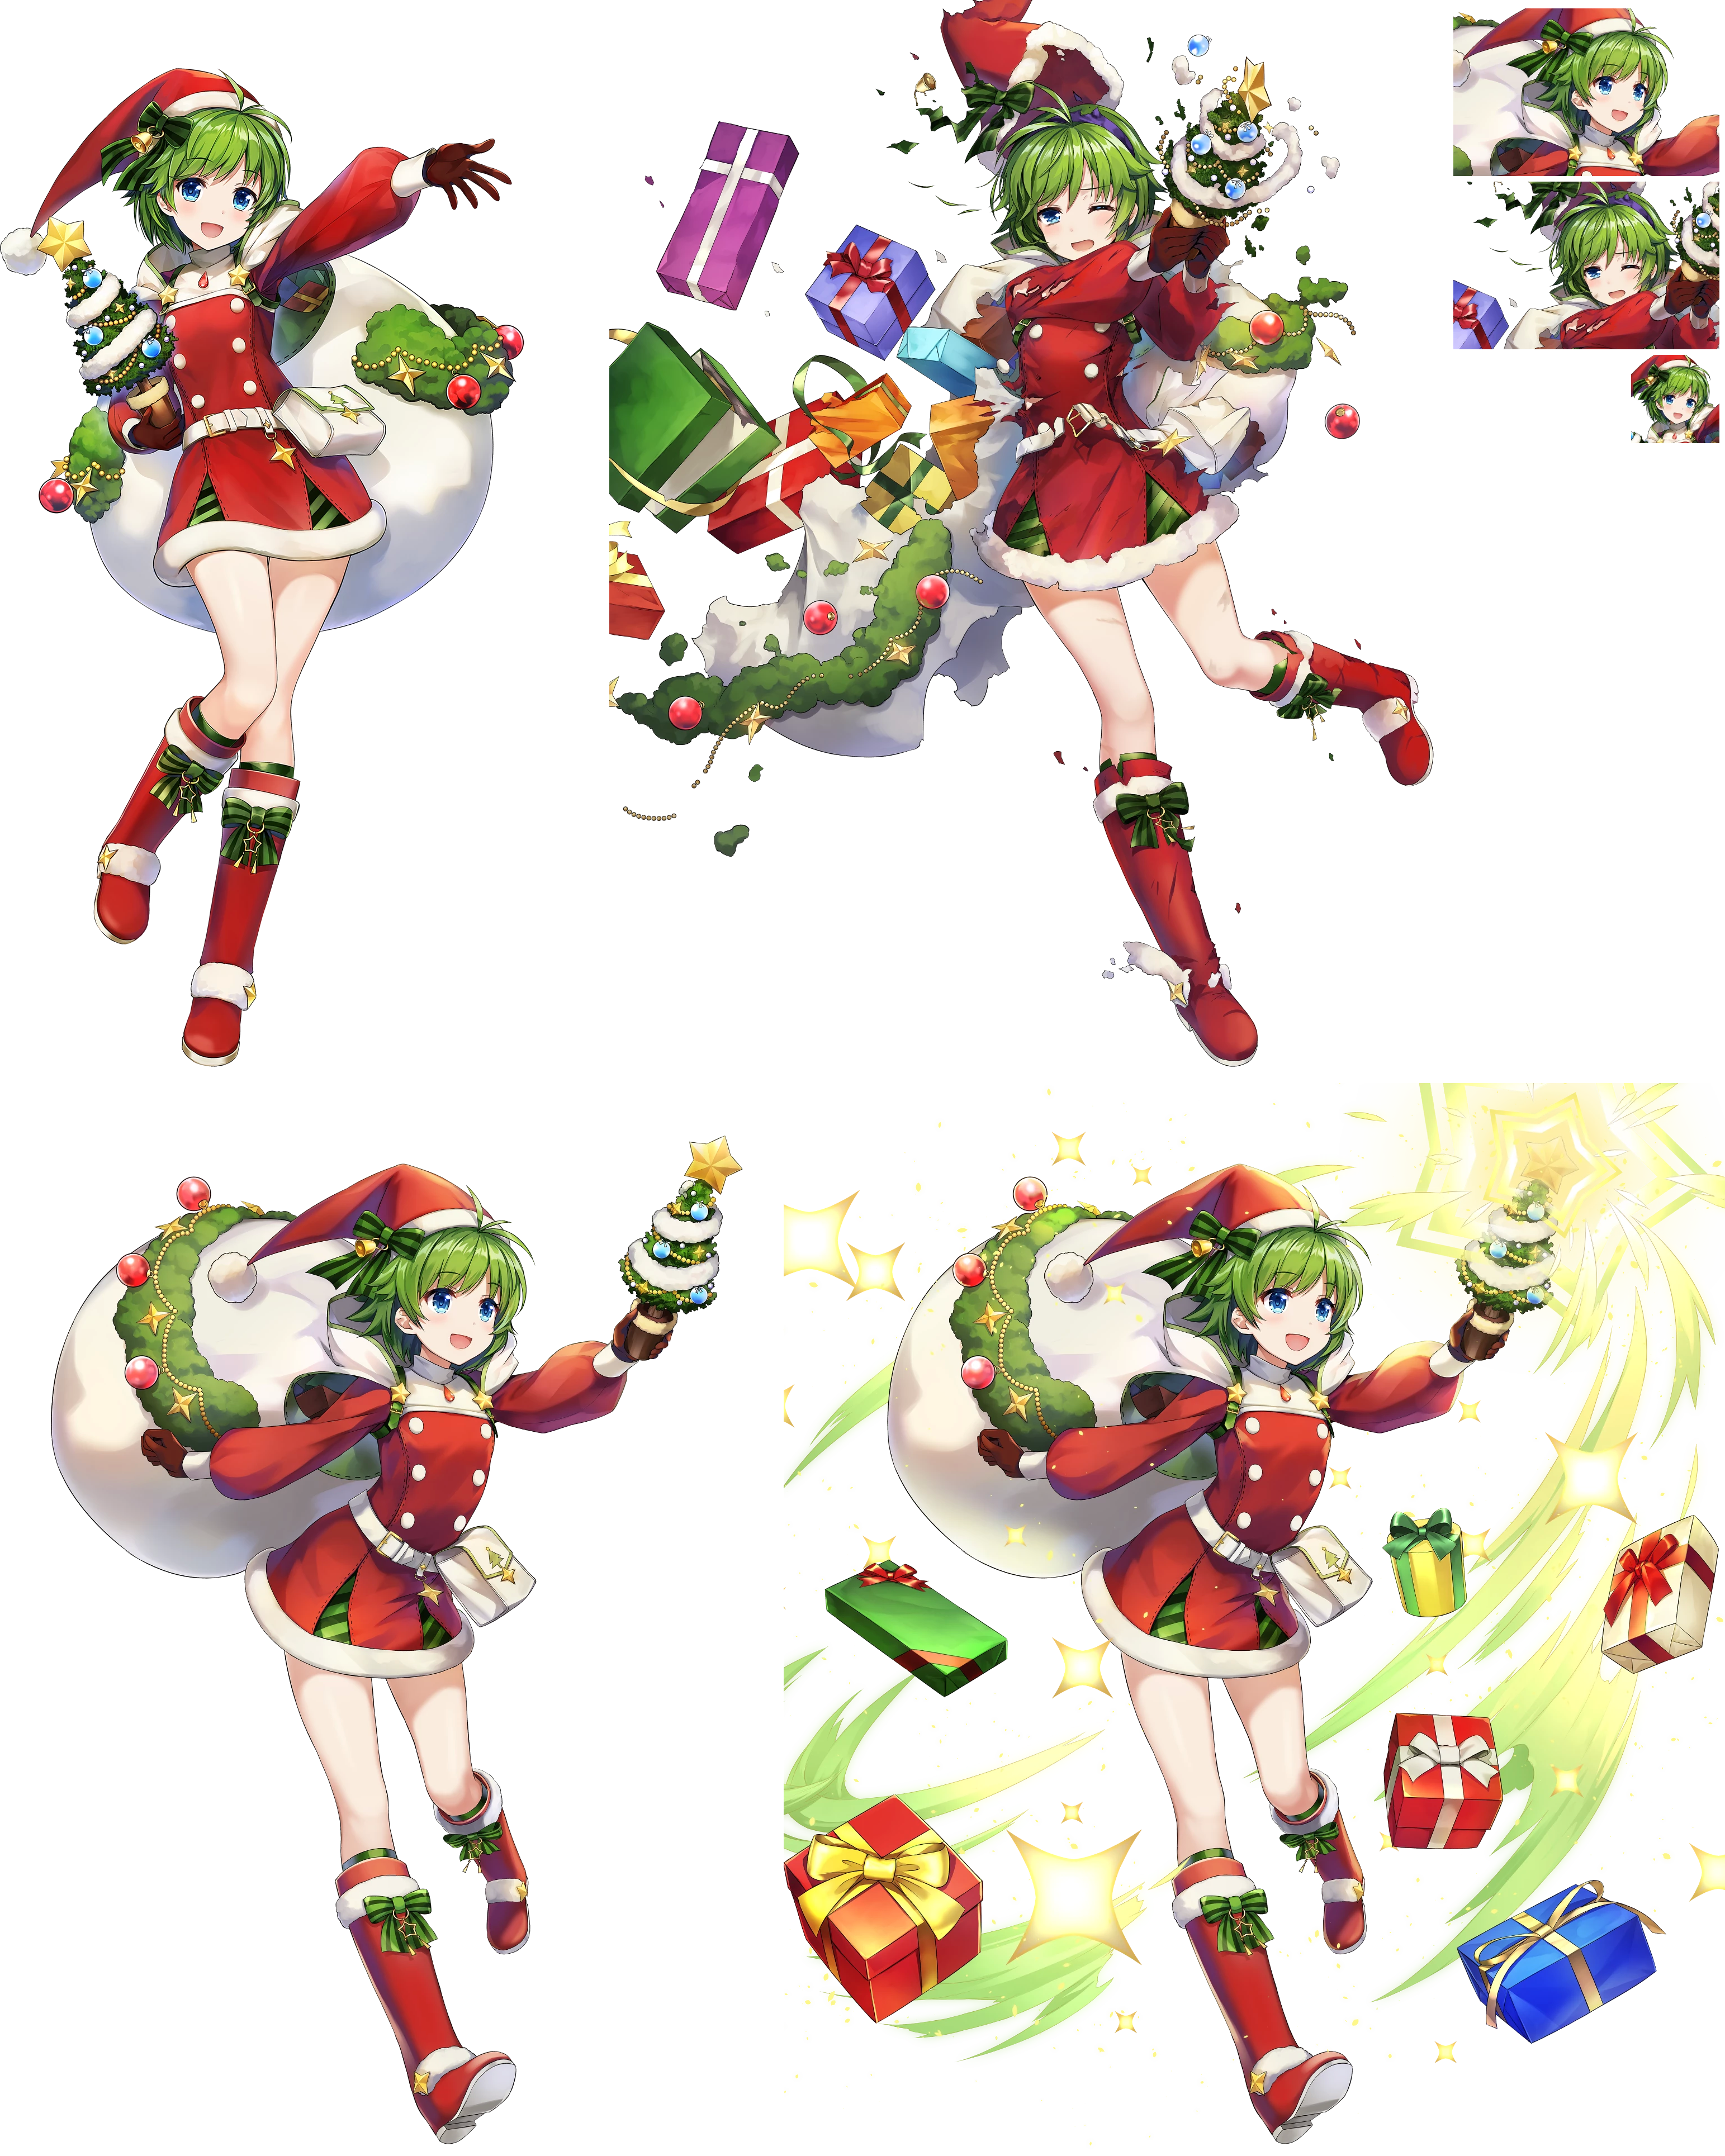 Nino (Glorious Gifts)